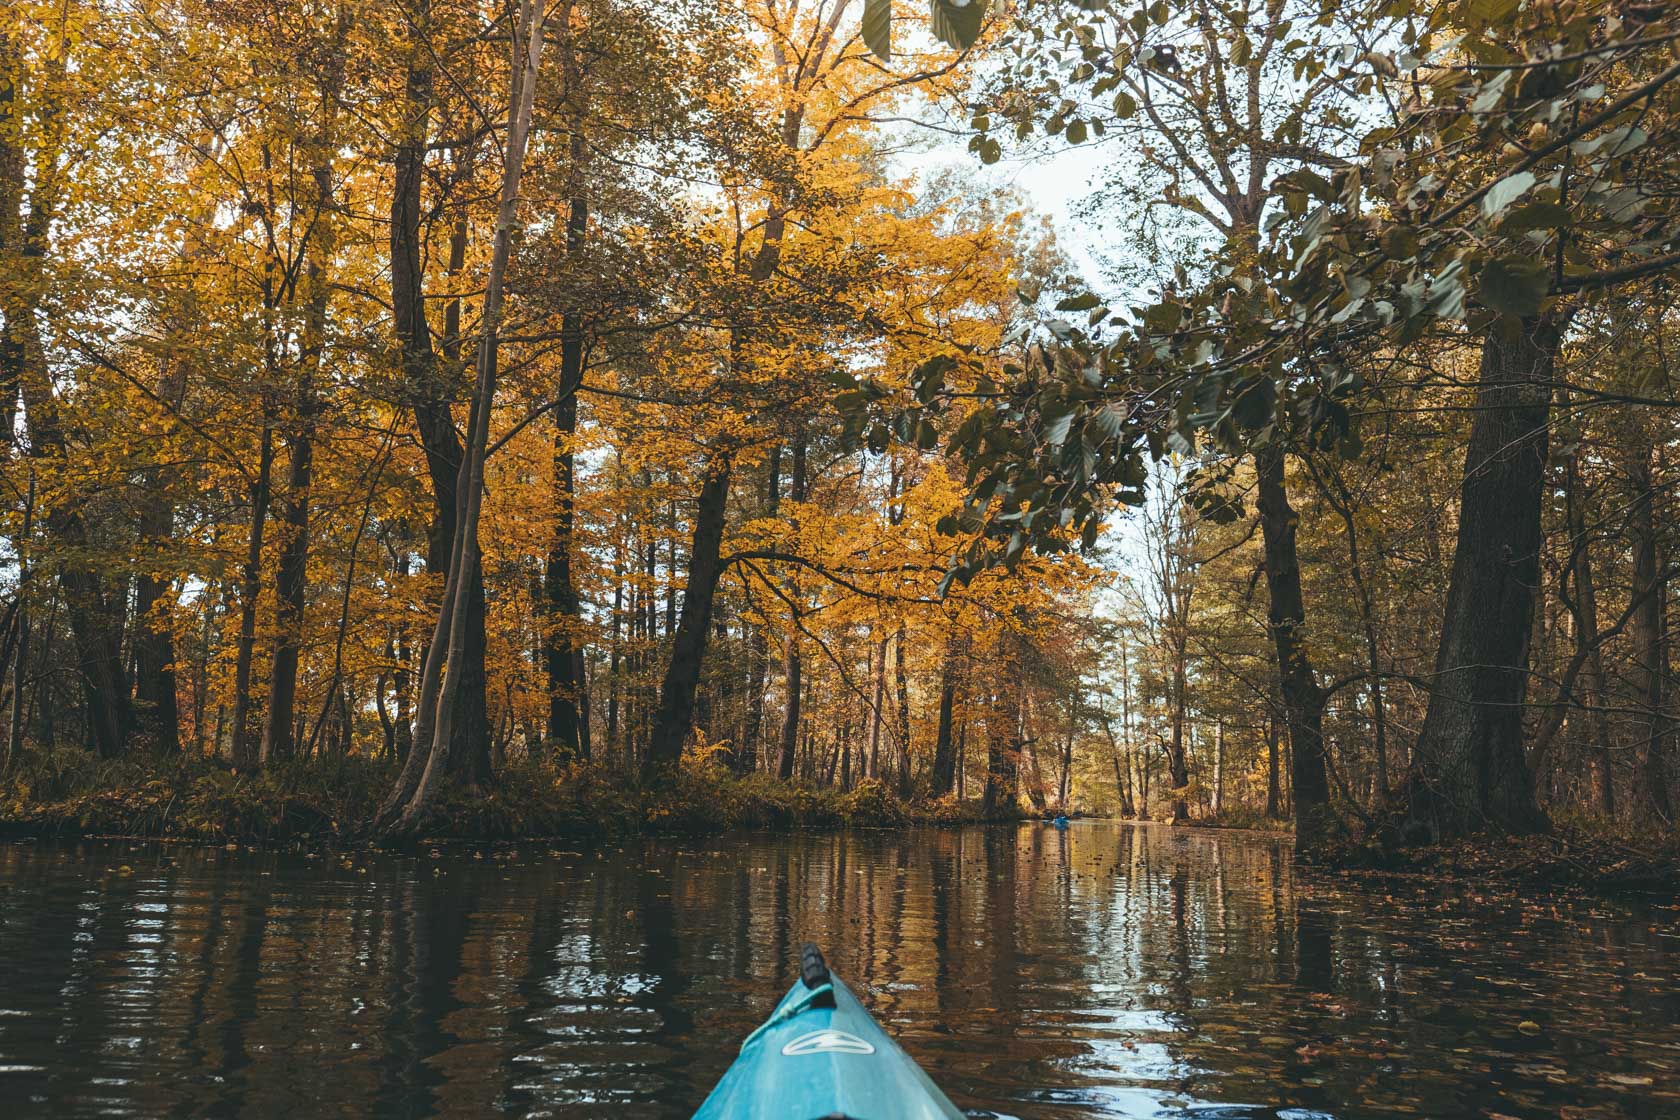 Kayak in Spreewald, Germany